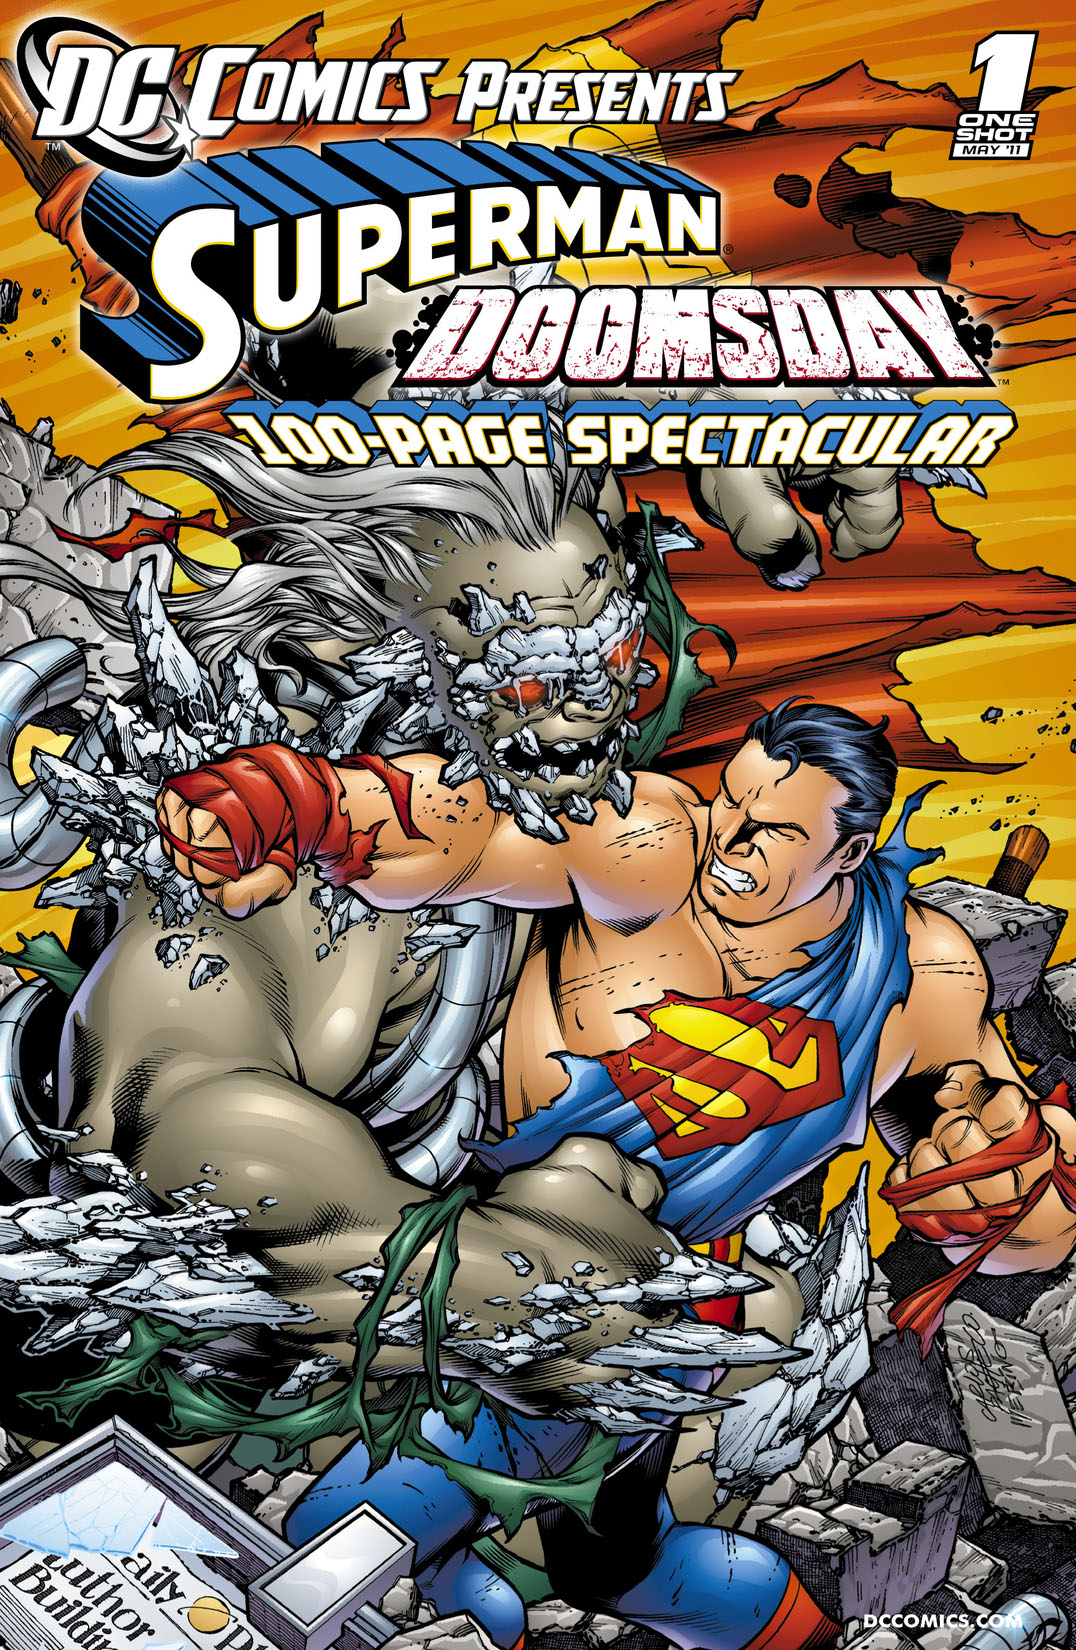 DC Comics Presents: Superman/Doomsday (2011-) #1 preview images